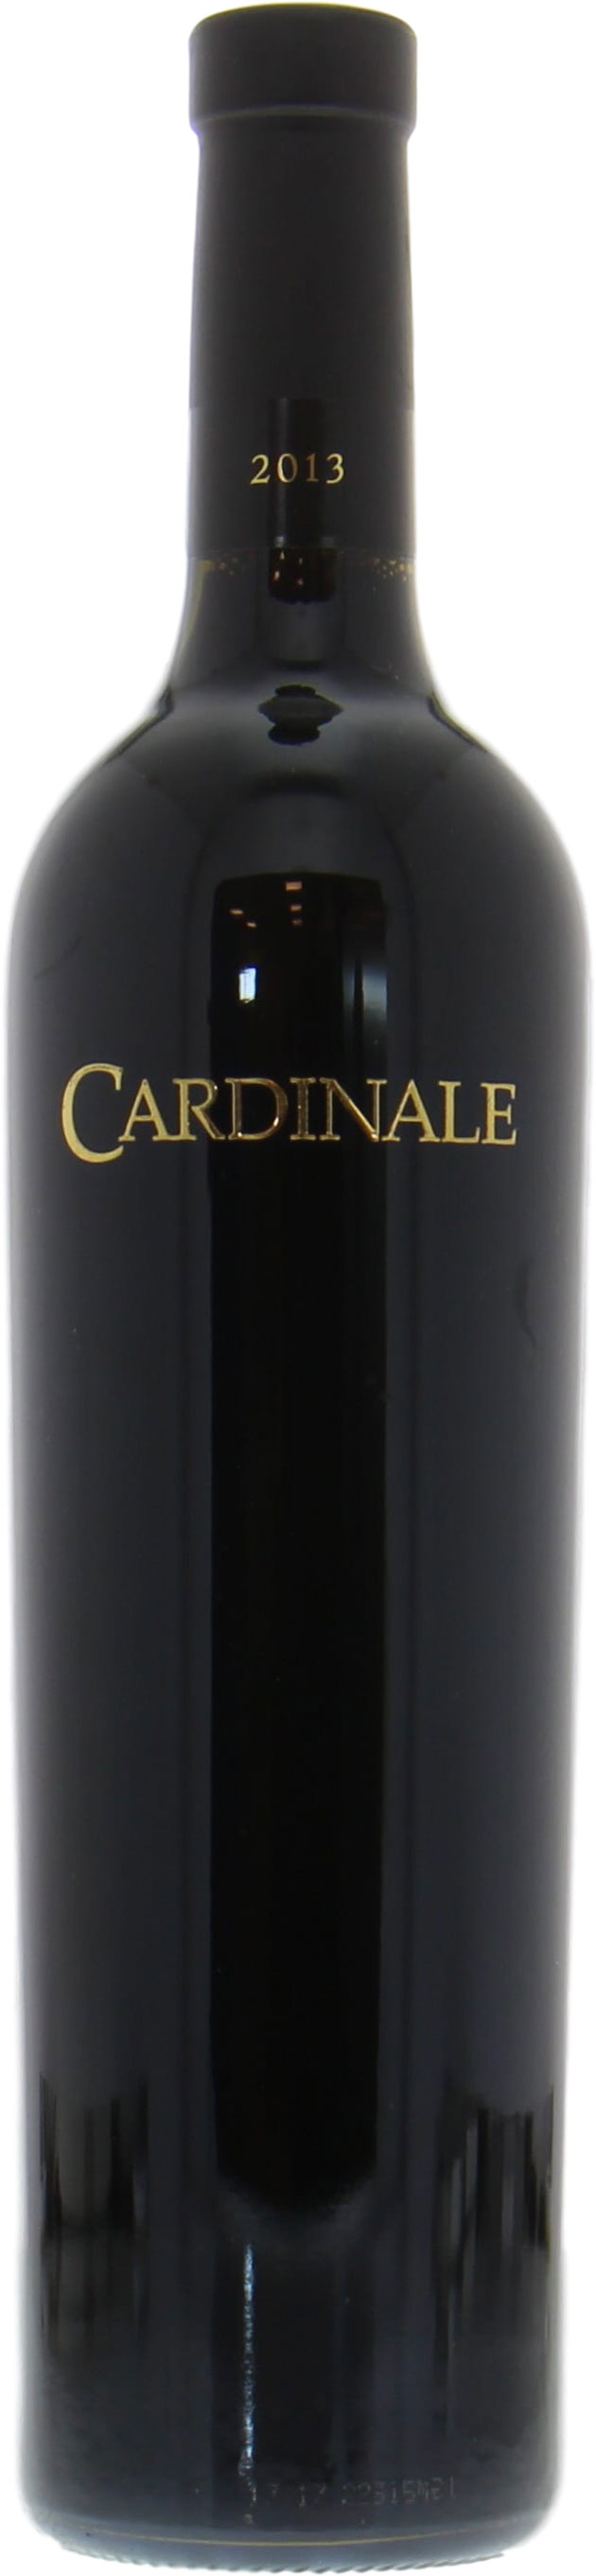 Cardinale - Proprietary Red Wine 2013